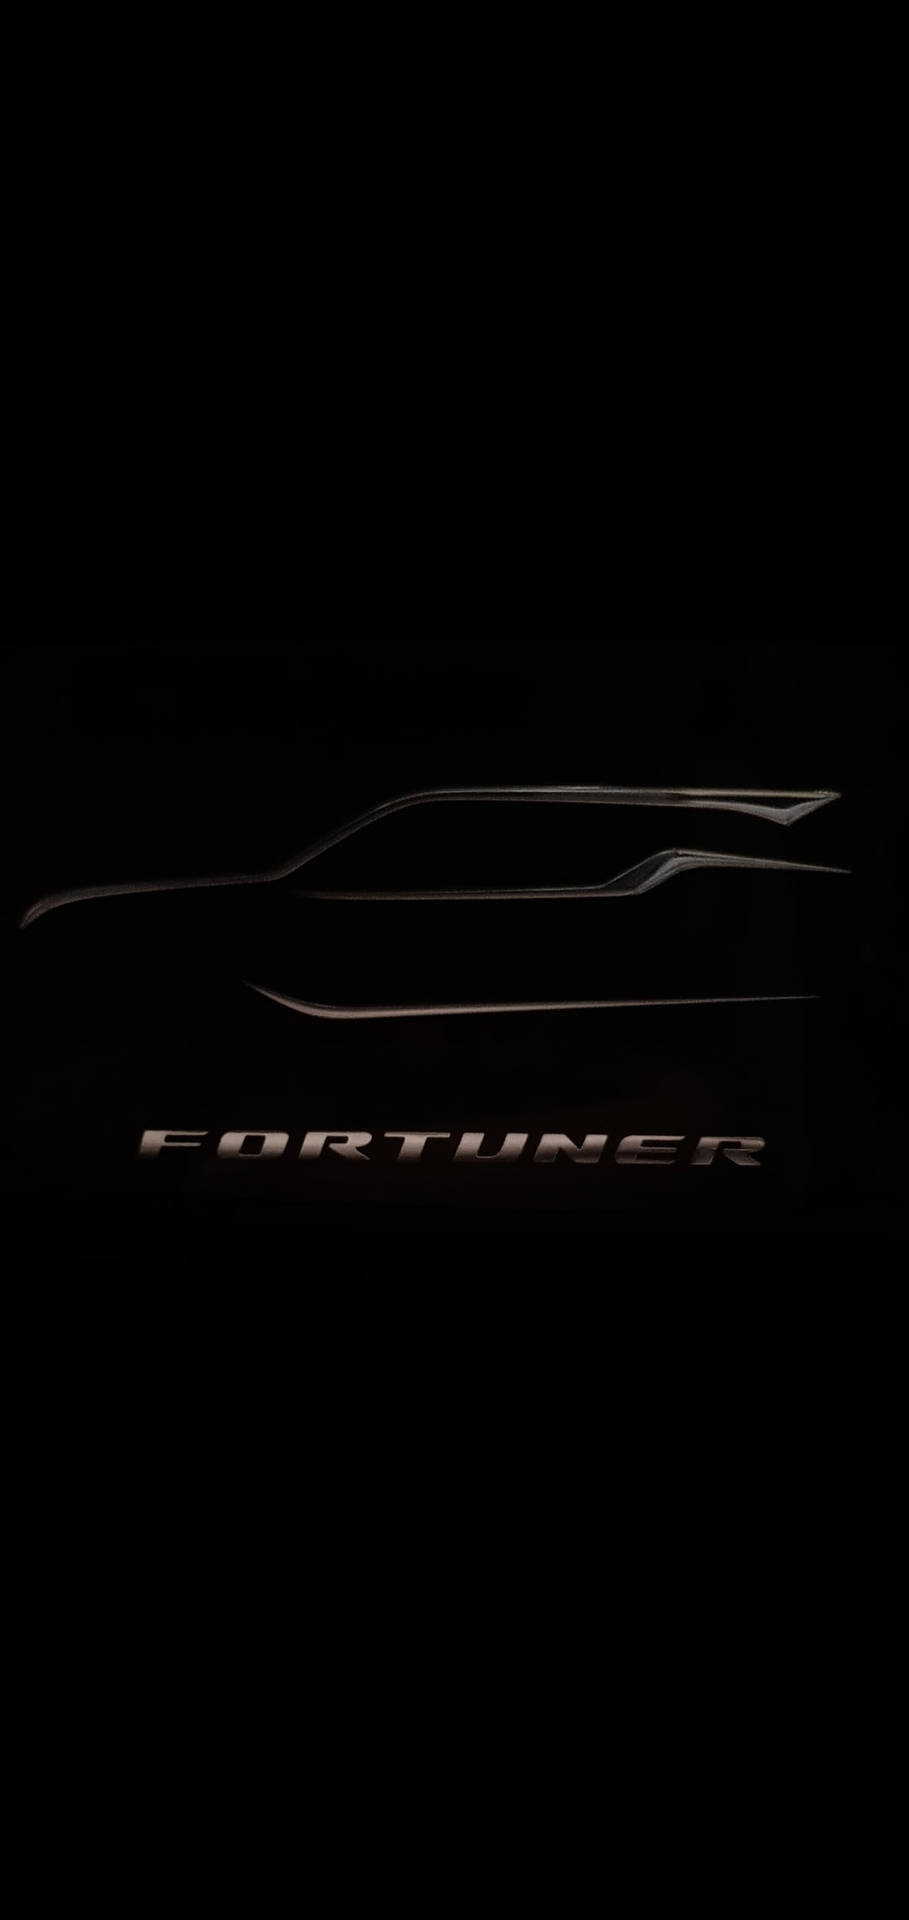 Toyotafortuner Logo Negro Fondo de pantalla